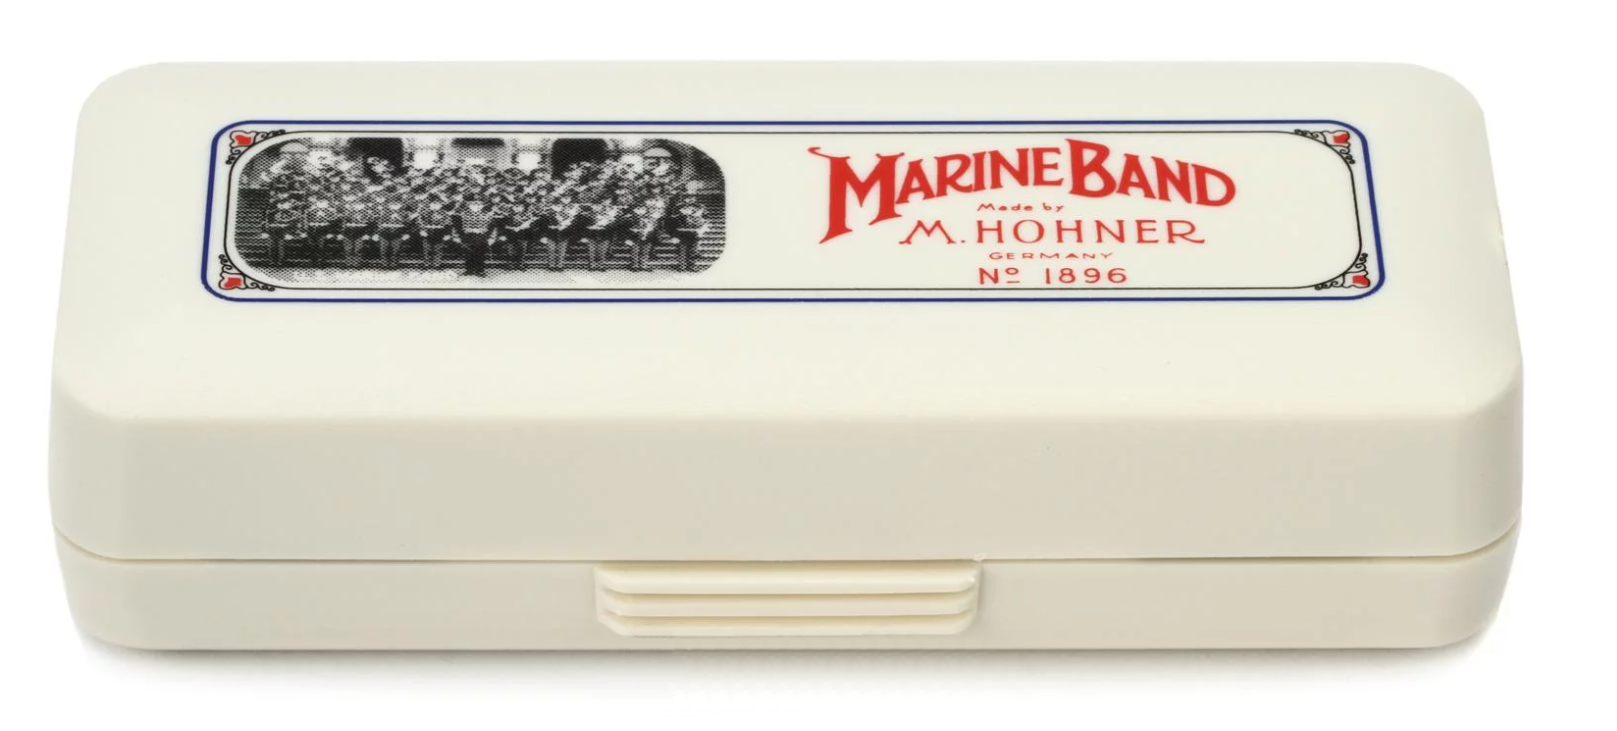 HOHNER  Diatonic Harmonica, Marine Band 1896 - Key of F#